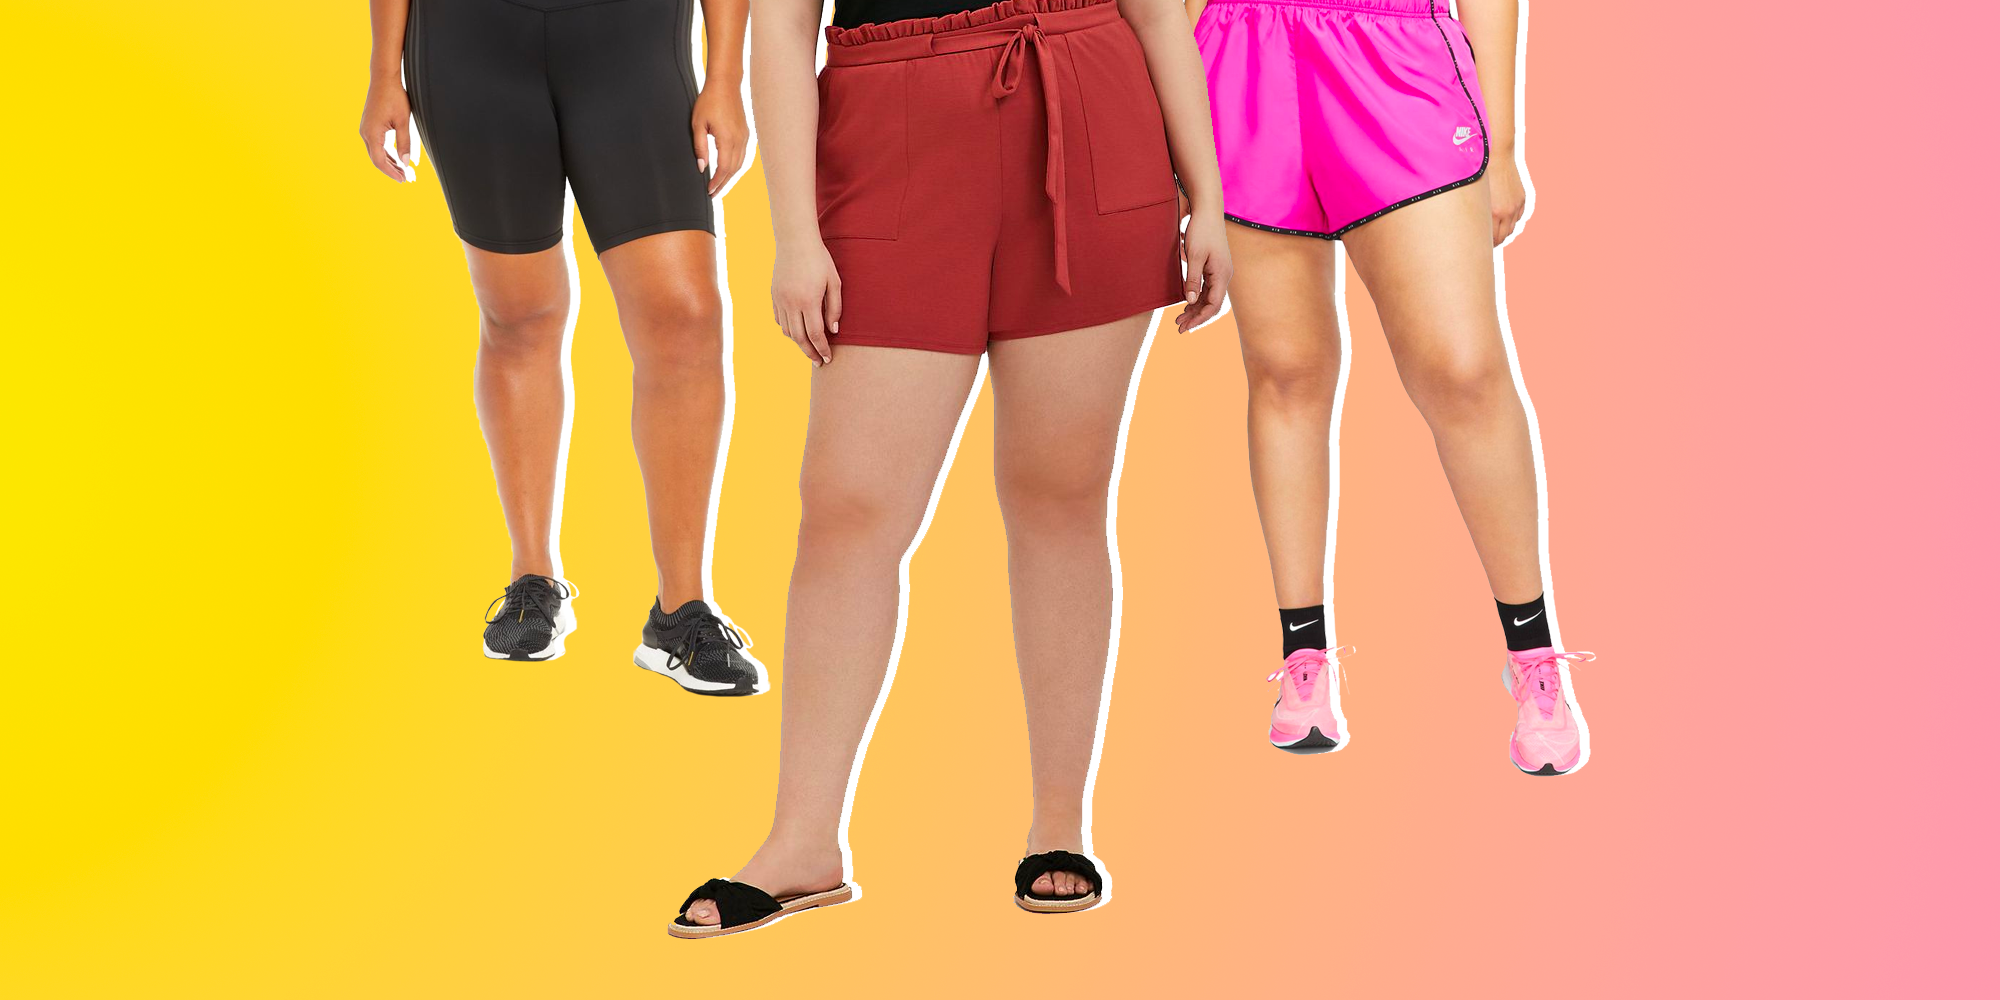 women's plus size dri fit shorts